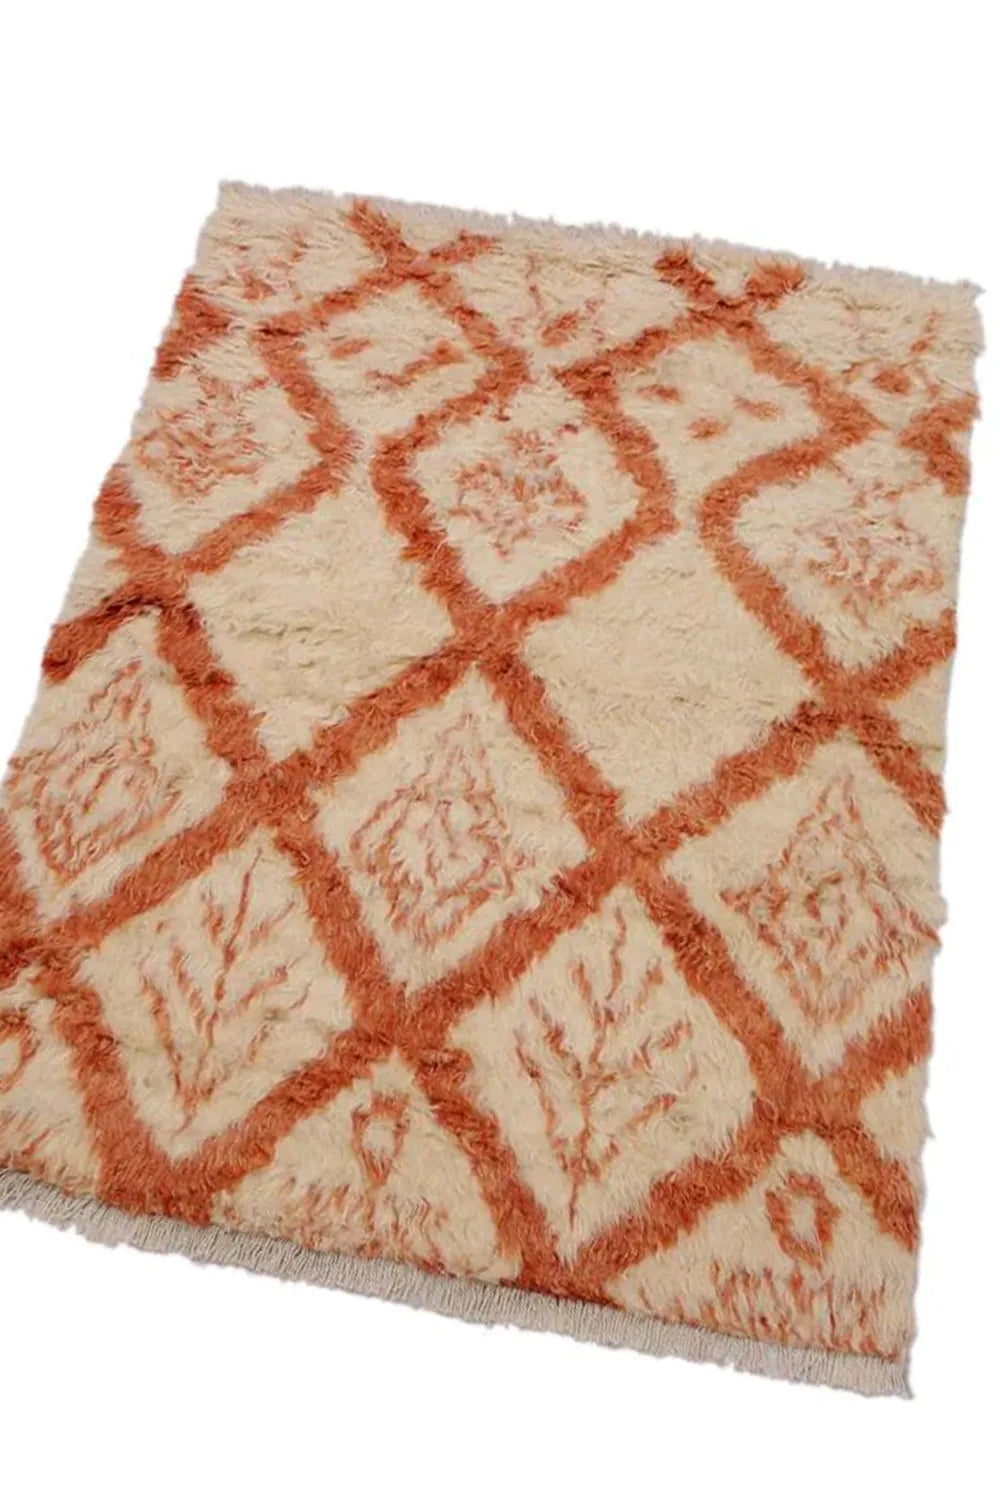 handmade white shag rug with a warm terracotta pattern, adding a modern touch